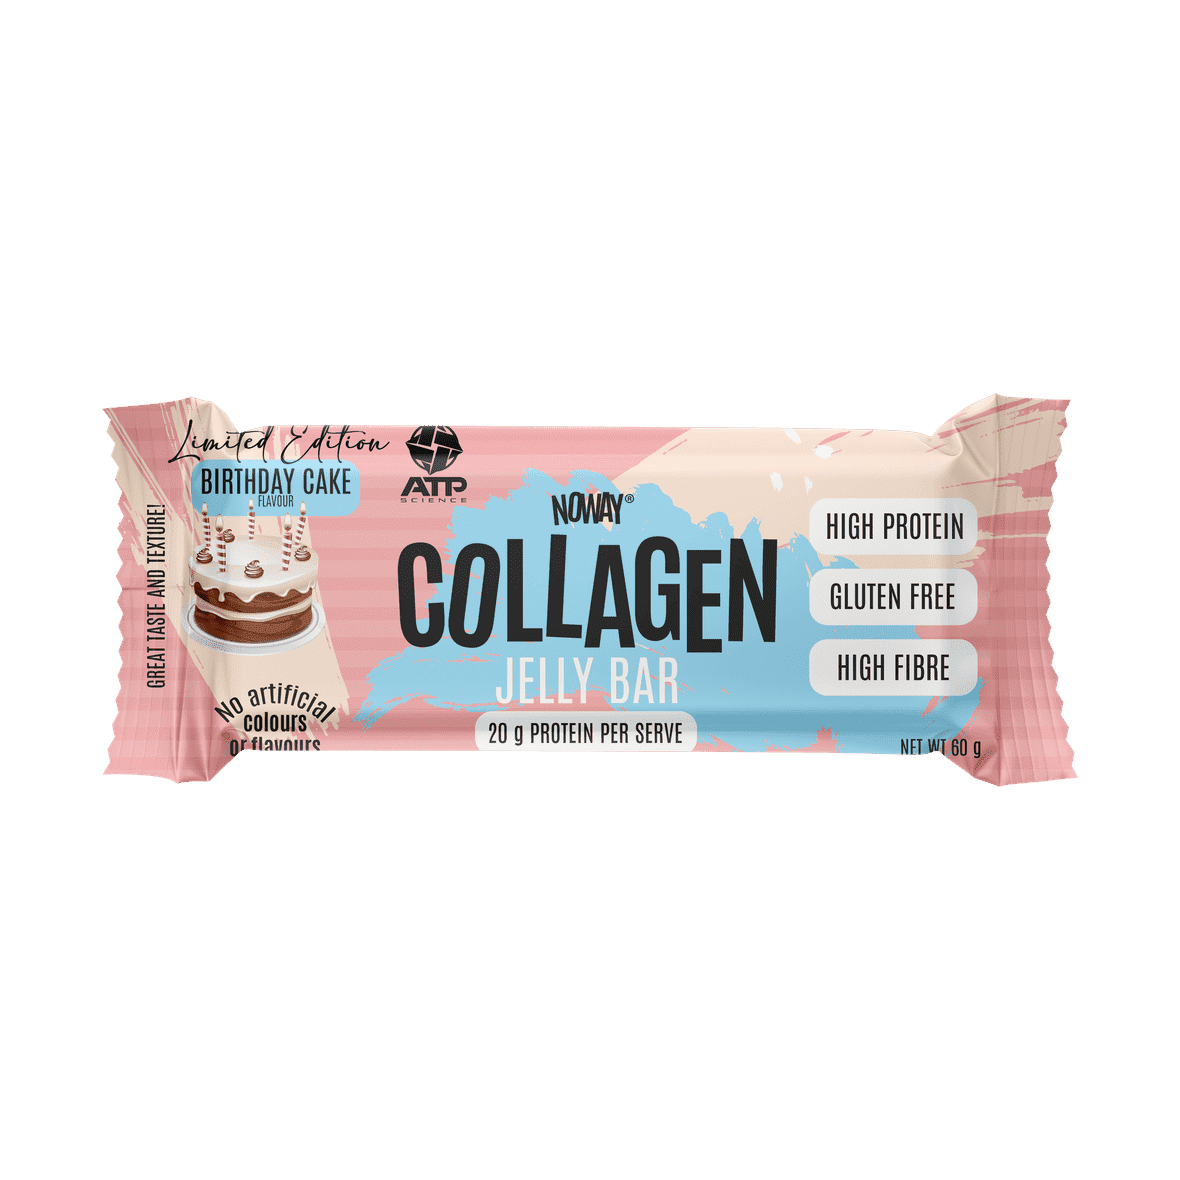 ATP Noway Collagen Jelly Bar